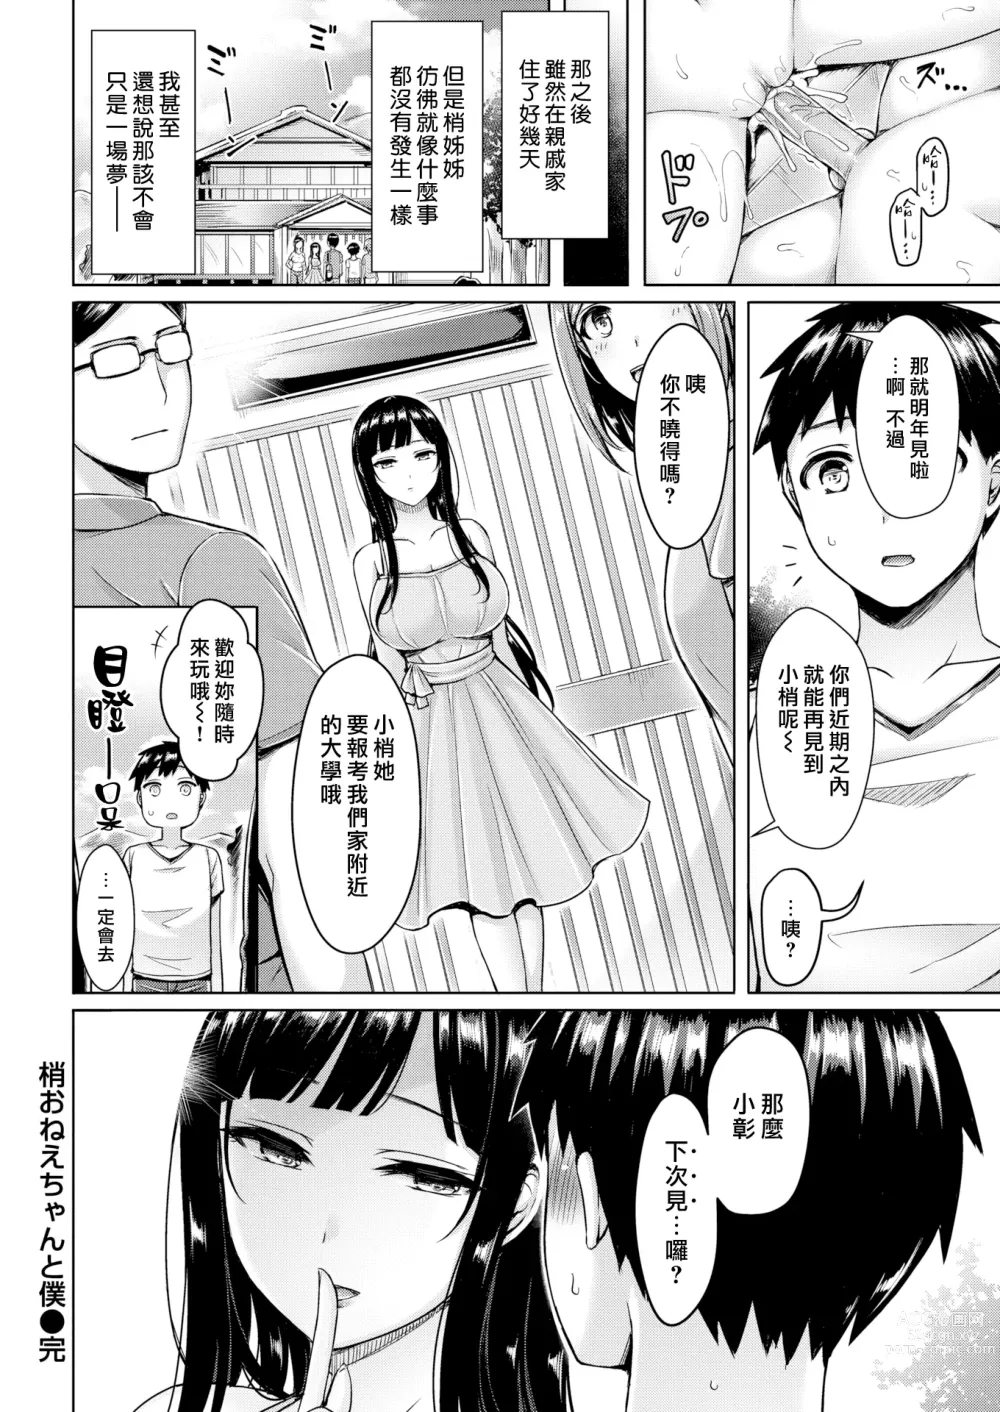 Page 25 of doujinshi ぱいぱれーど + 4Pリーフレット